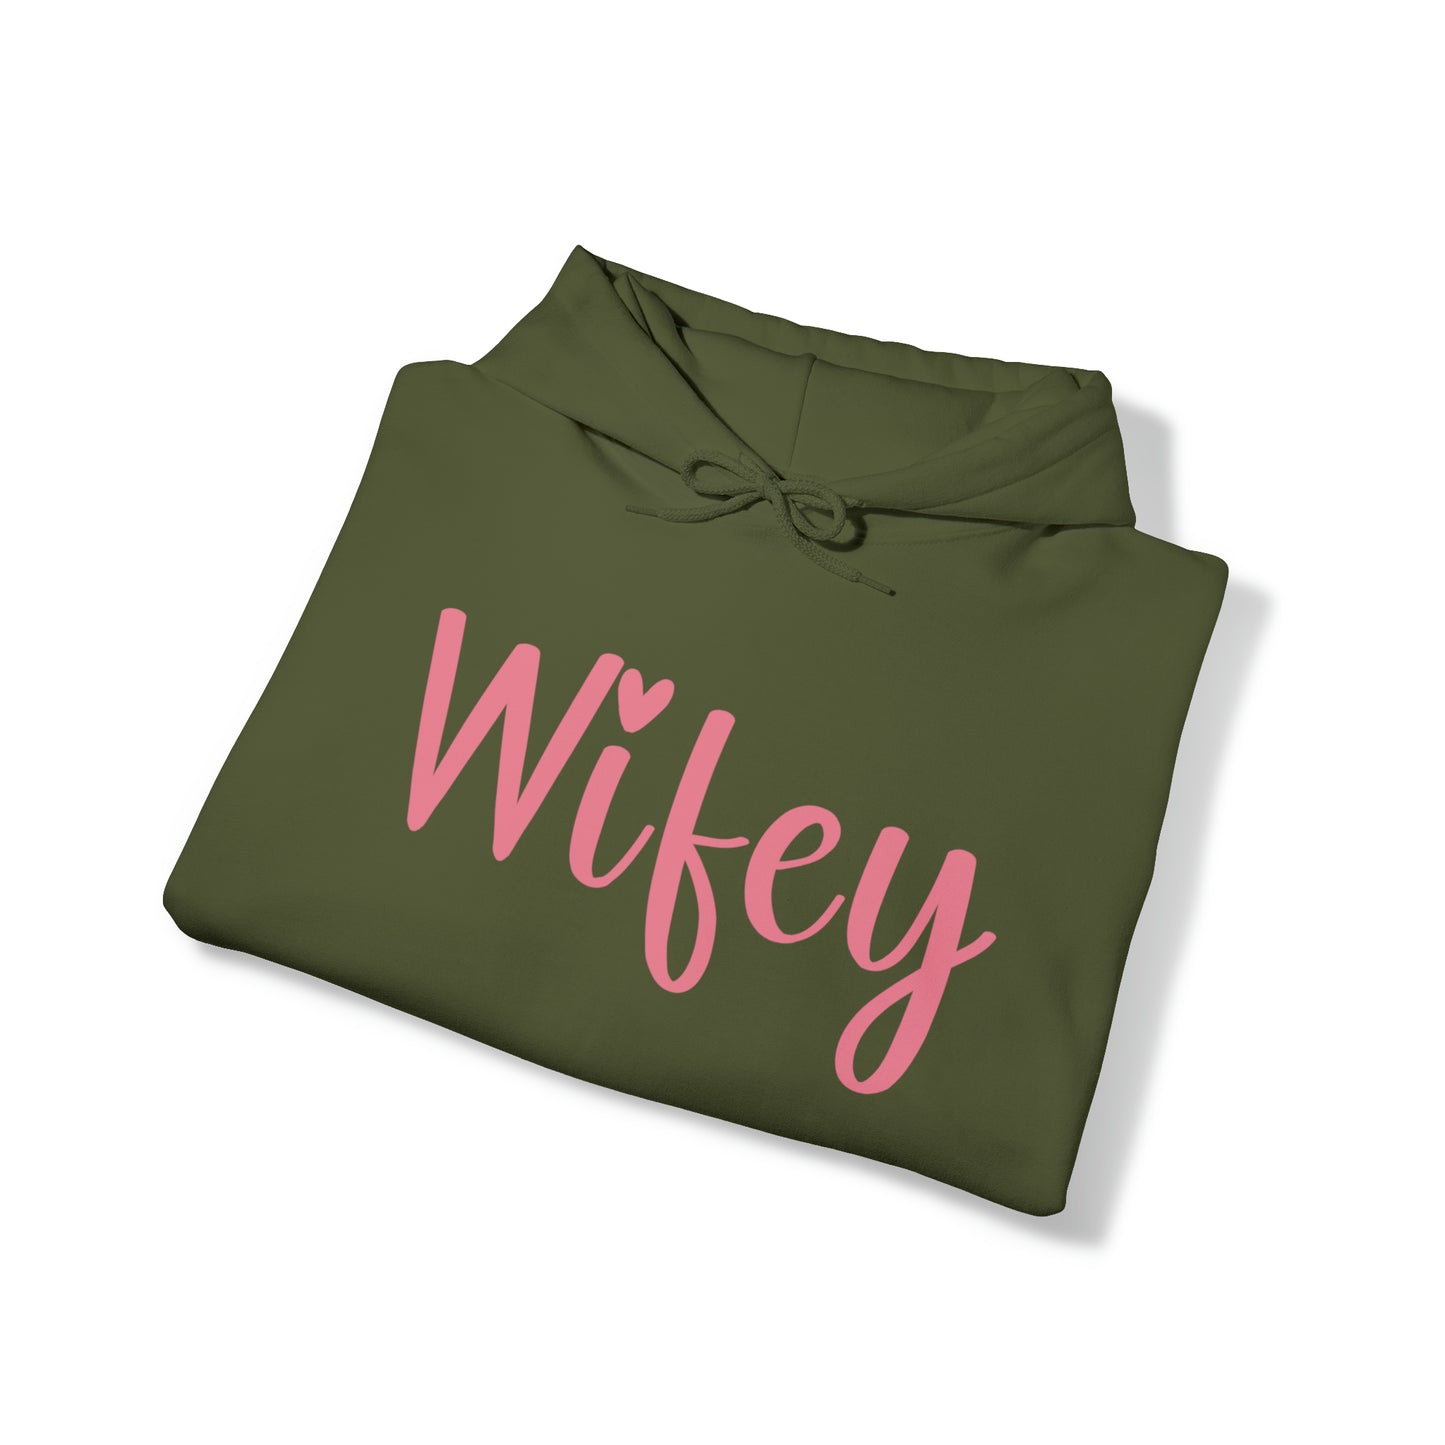 WIFEY Hooded Sweatshirt, Couple Shirt, Matching Shirts